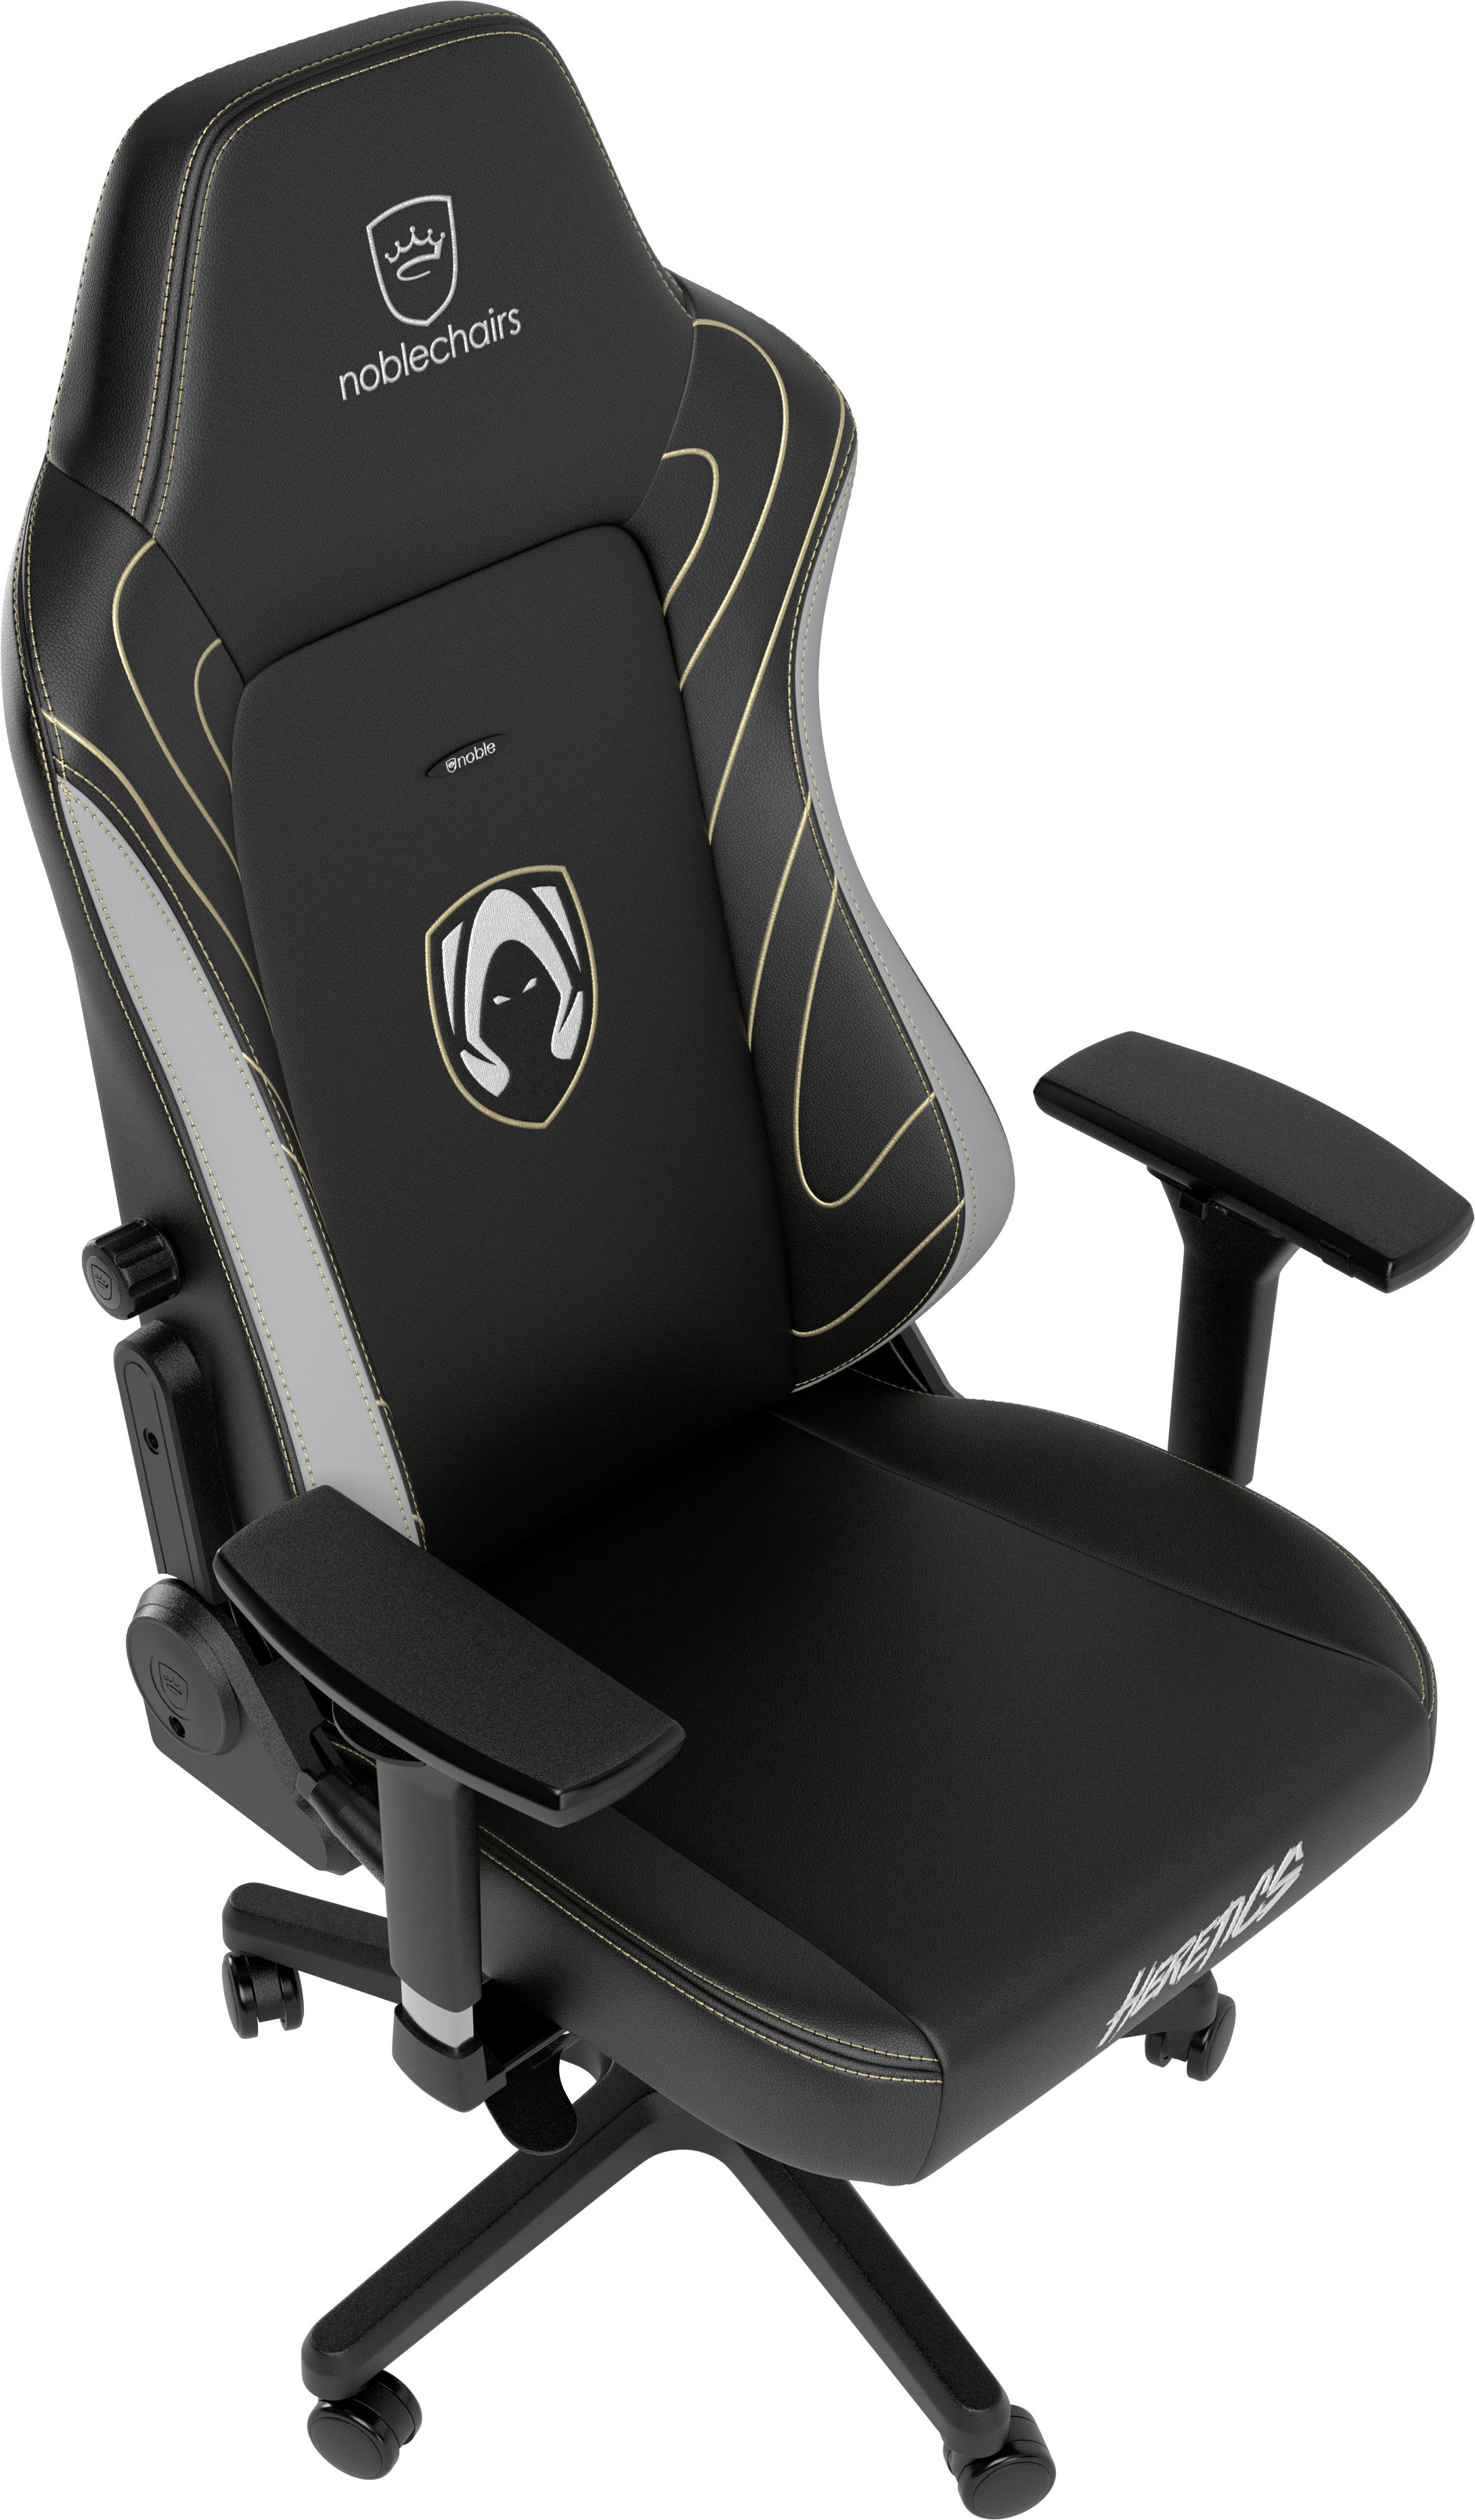 noblechairs HERO Team Heretics Edition adjustable armrests